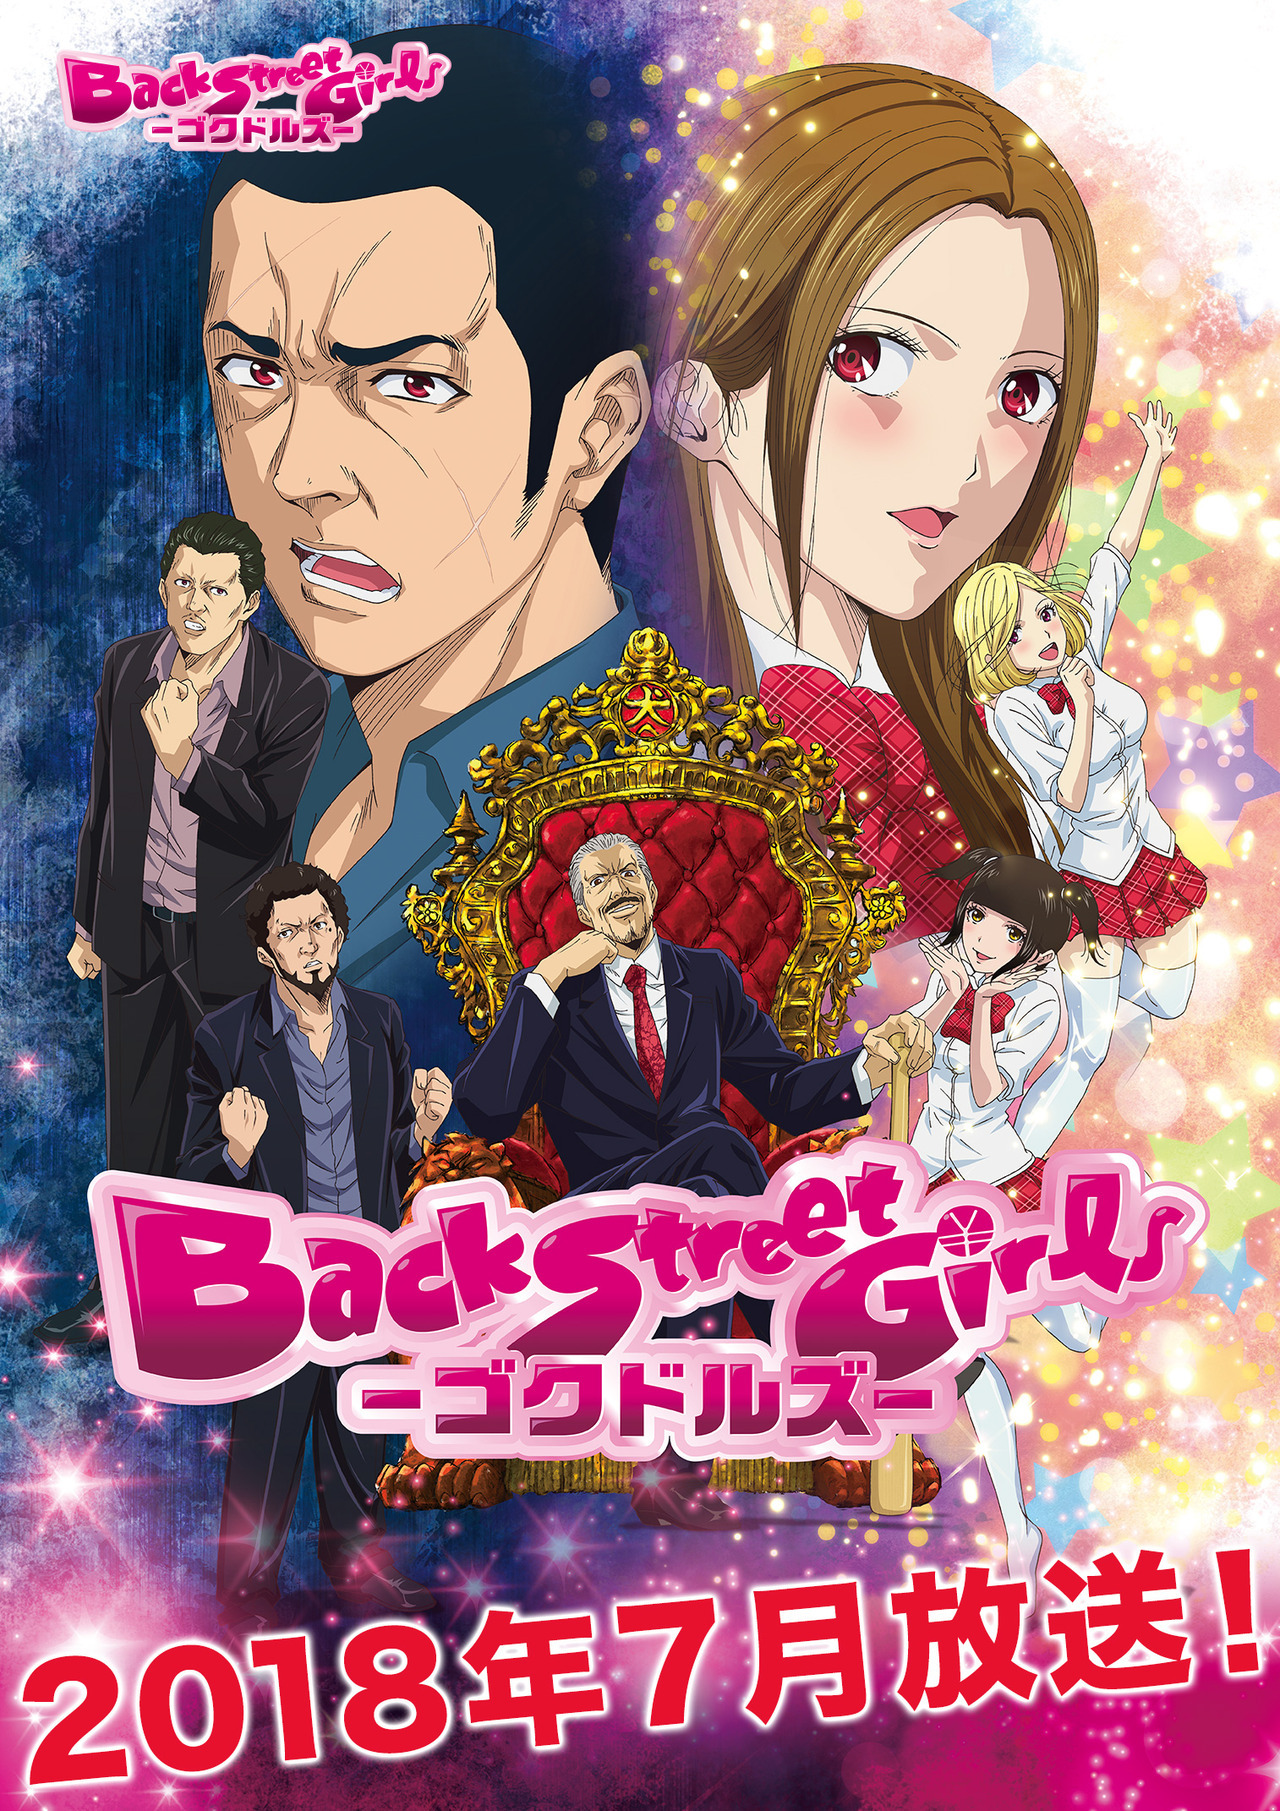 A new anime key visual for âBack Street Girlsâ has been unveiled. Broadcast premiere July 3rd (J.C.STAFF)